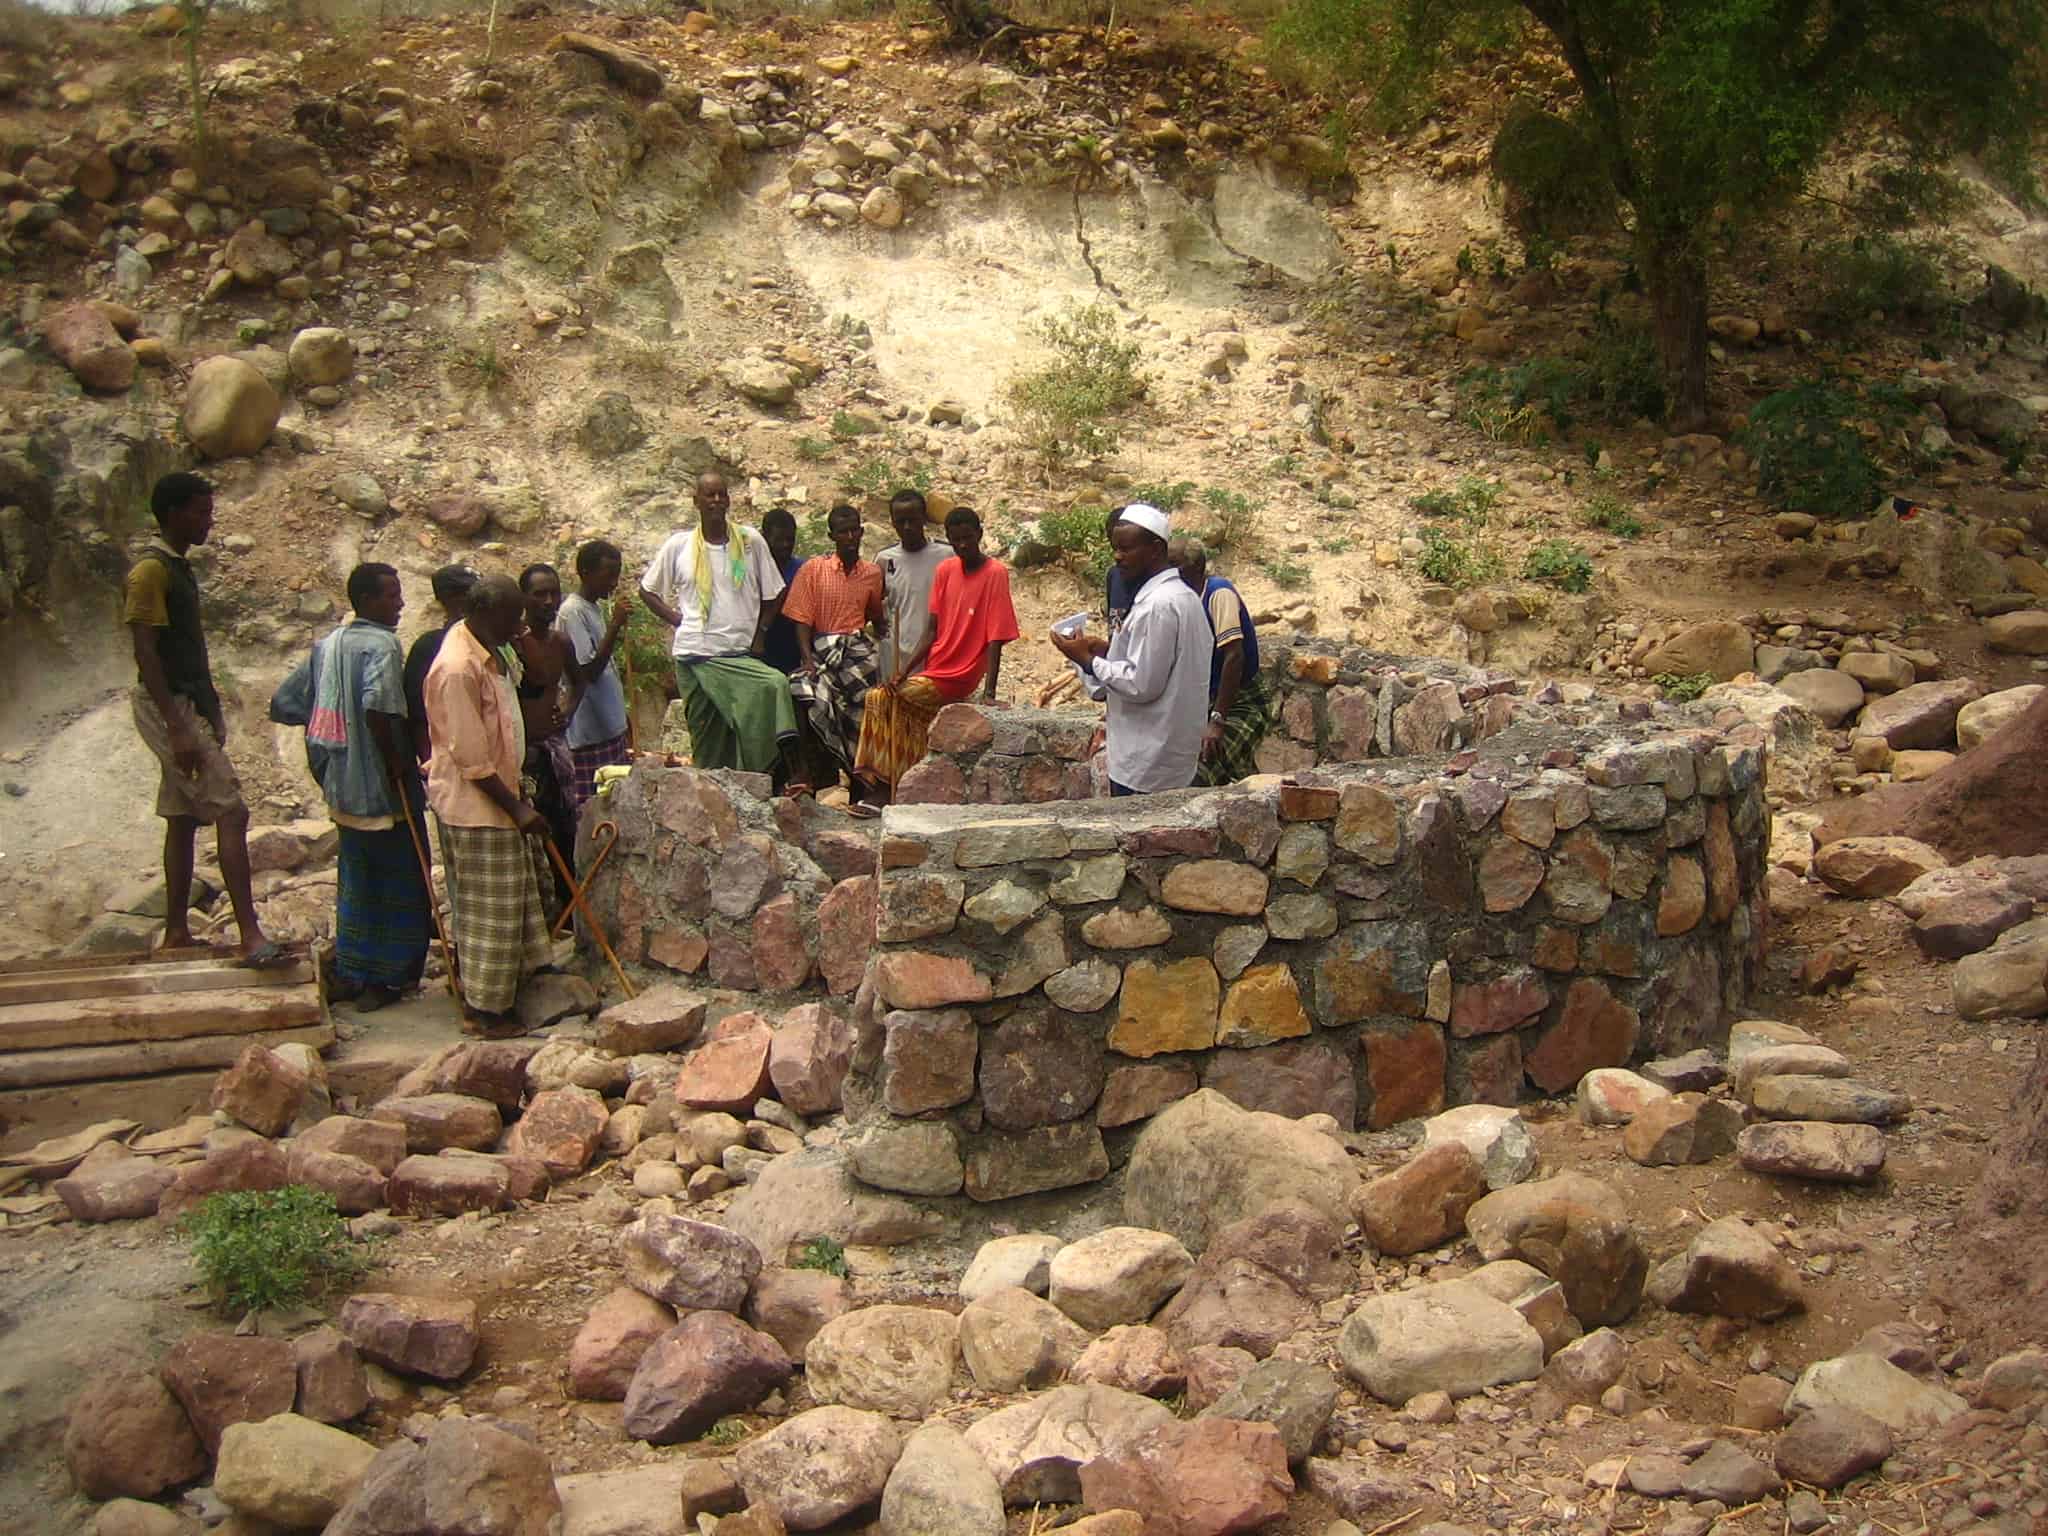 A group of community members repairing a well in Djbouti.